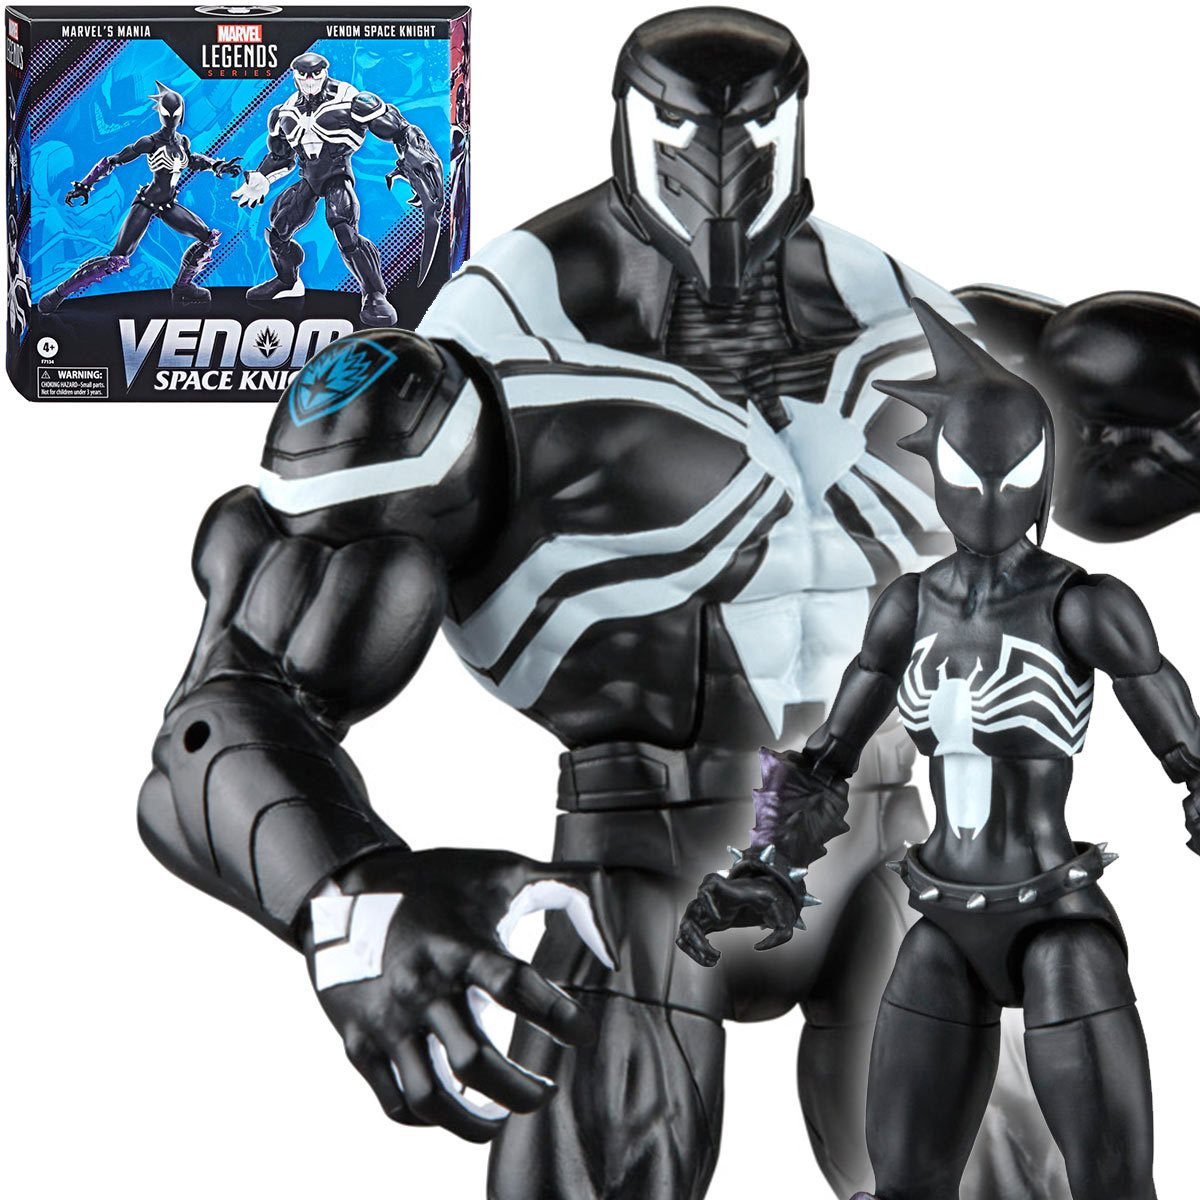 Marvel Legends Venom Space Knight and Marvel´s Mania